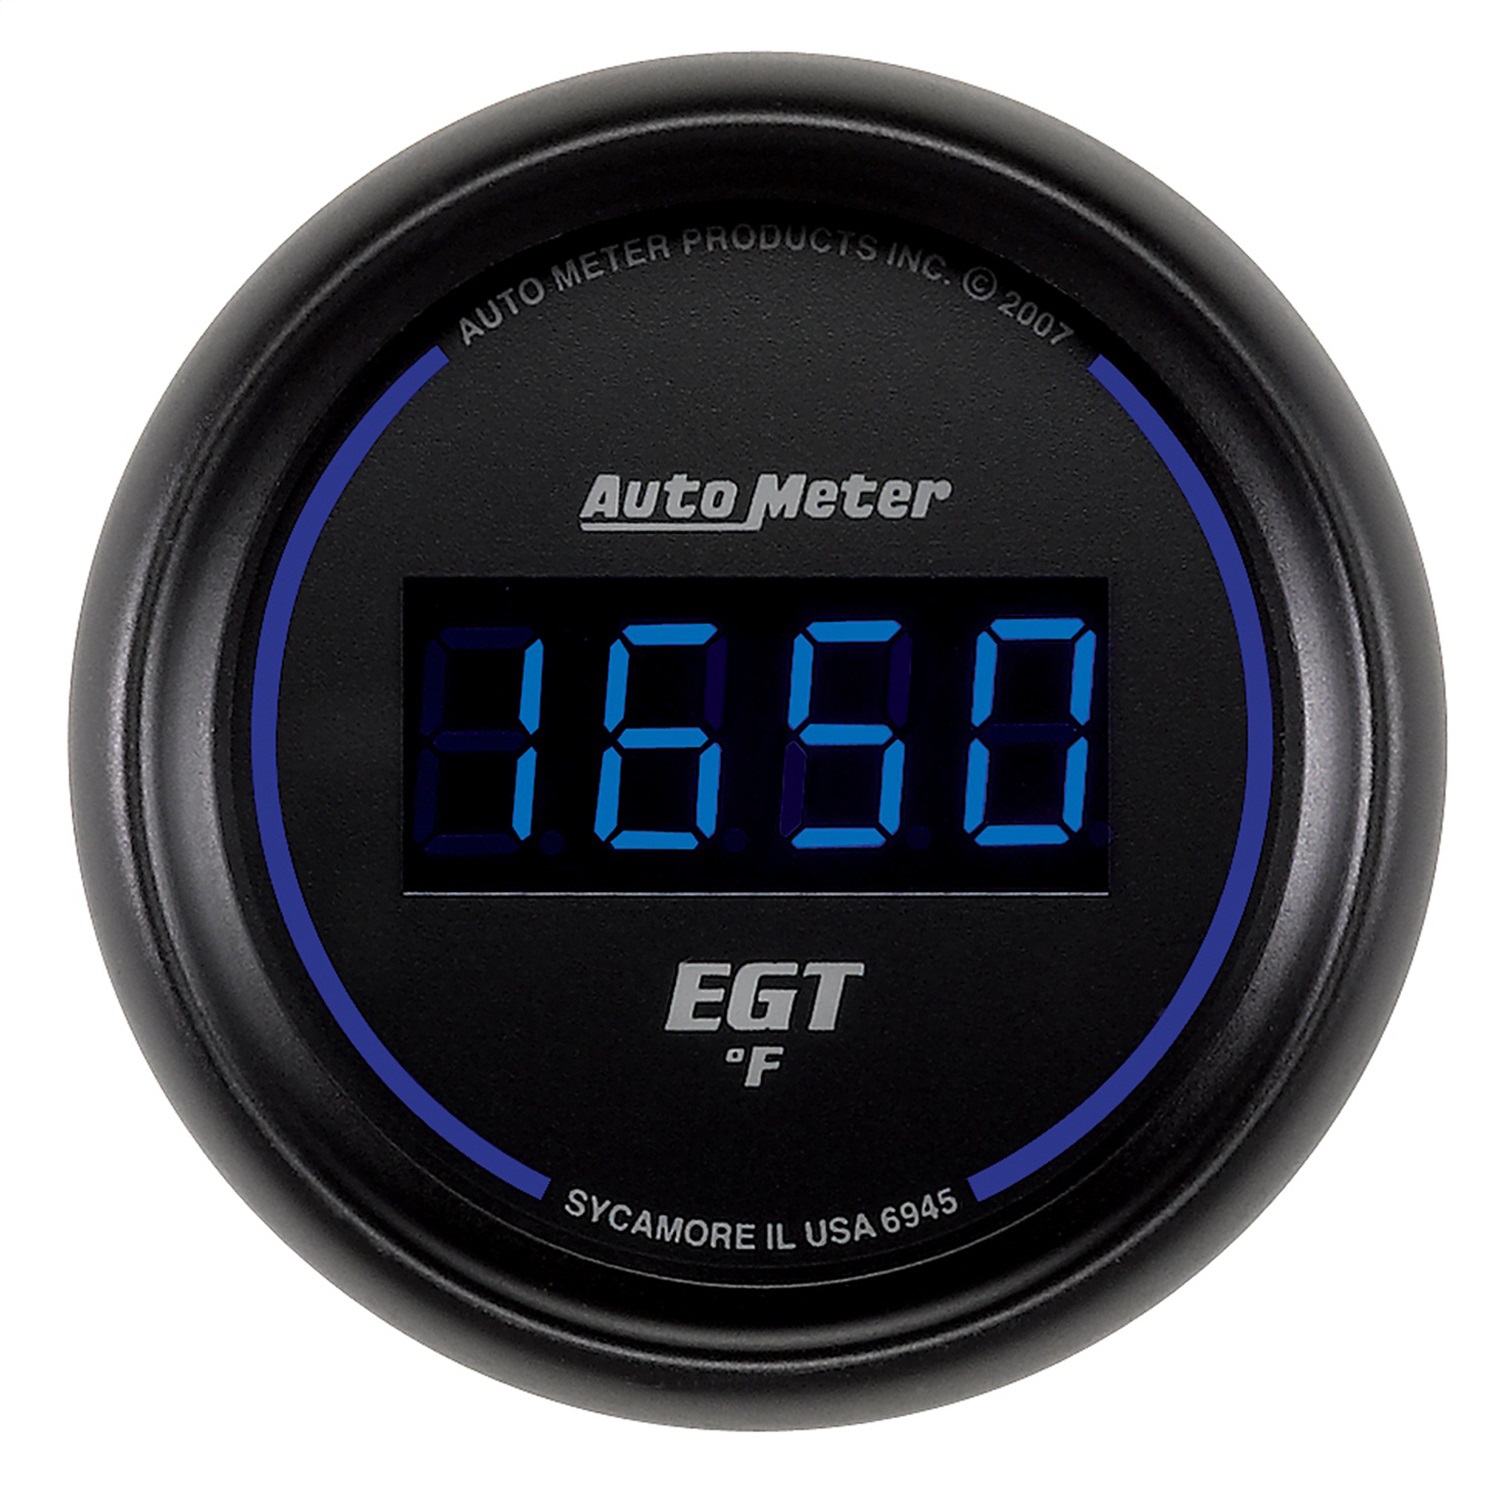 Auto Meter Auto Meter 6945 Cobalt; Digital Pyrometer Gauge